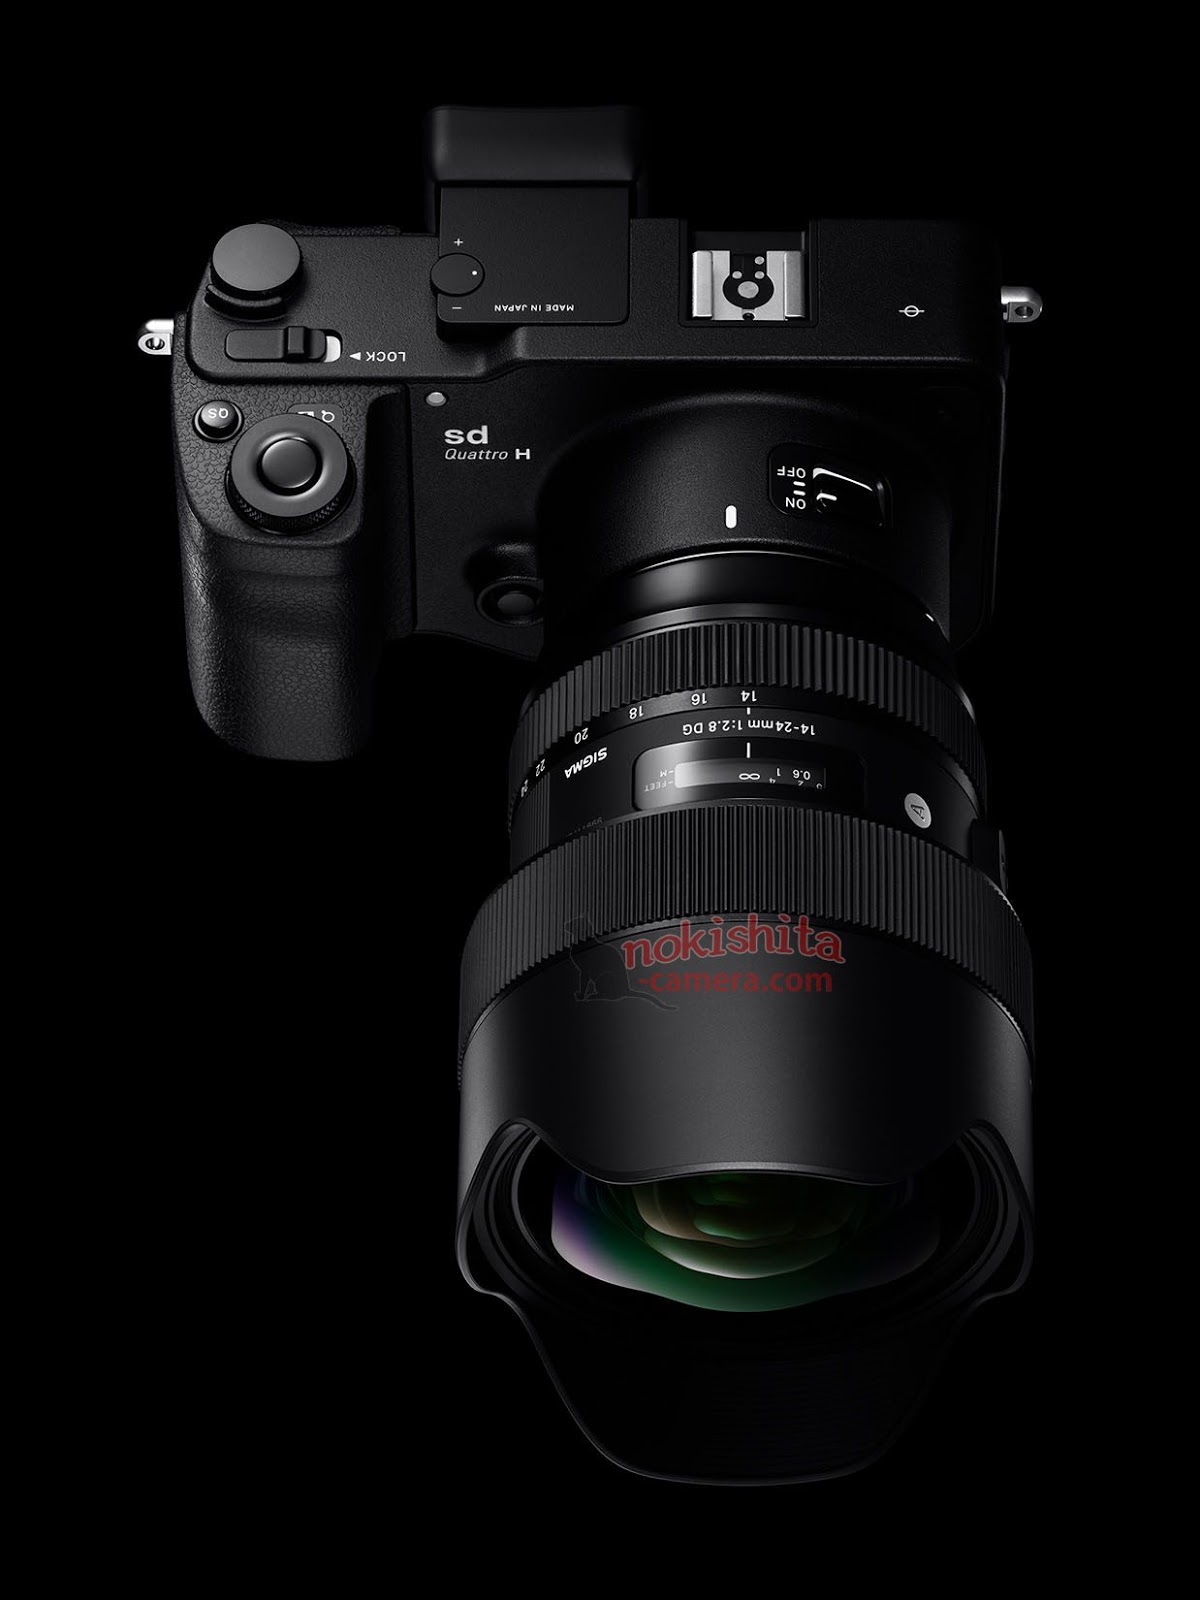 Sigma 14-24mm f/2.8 DG HSM Art на камере sd Quattro H